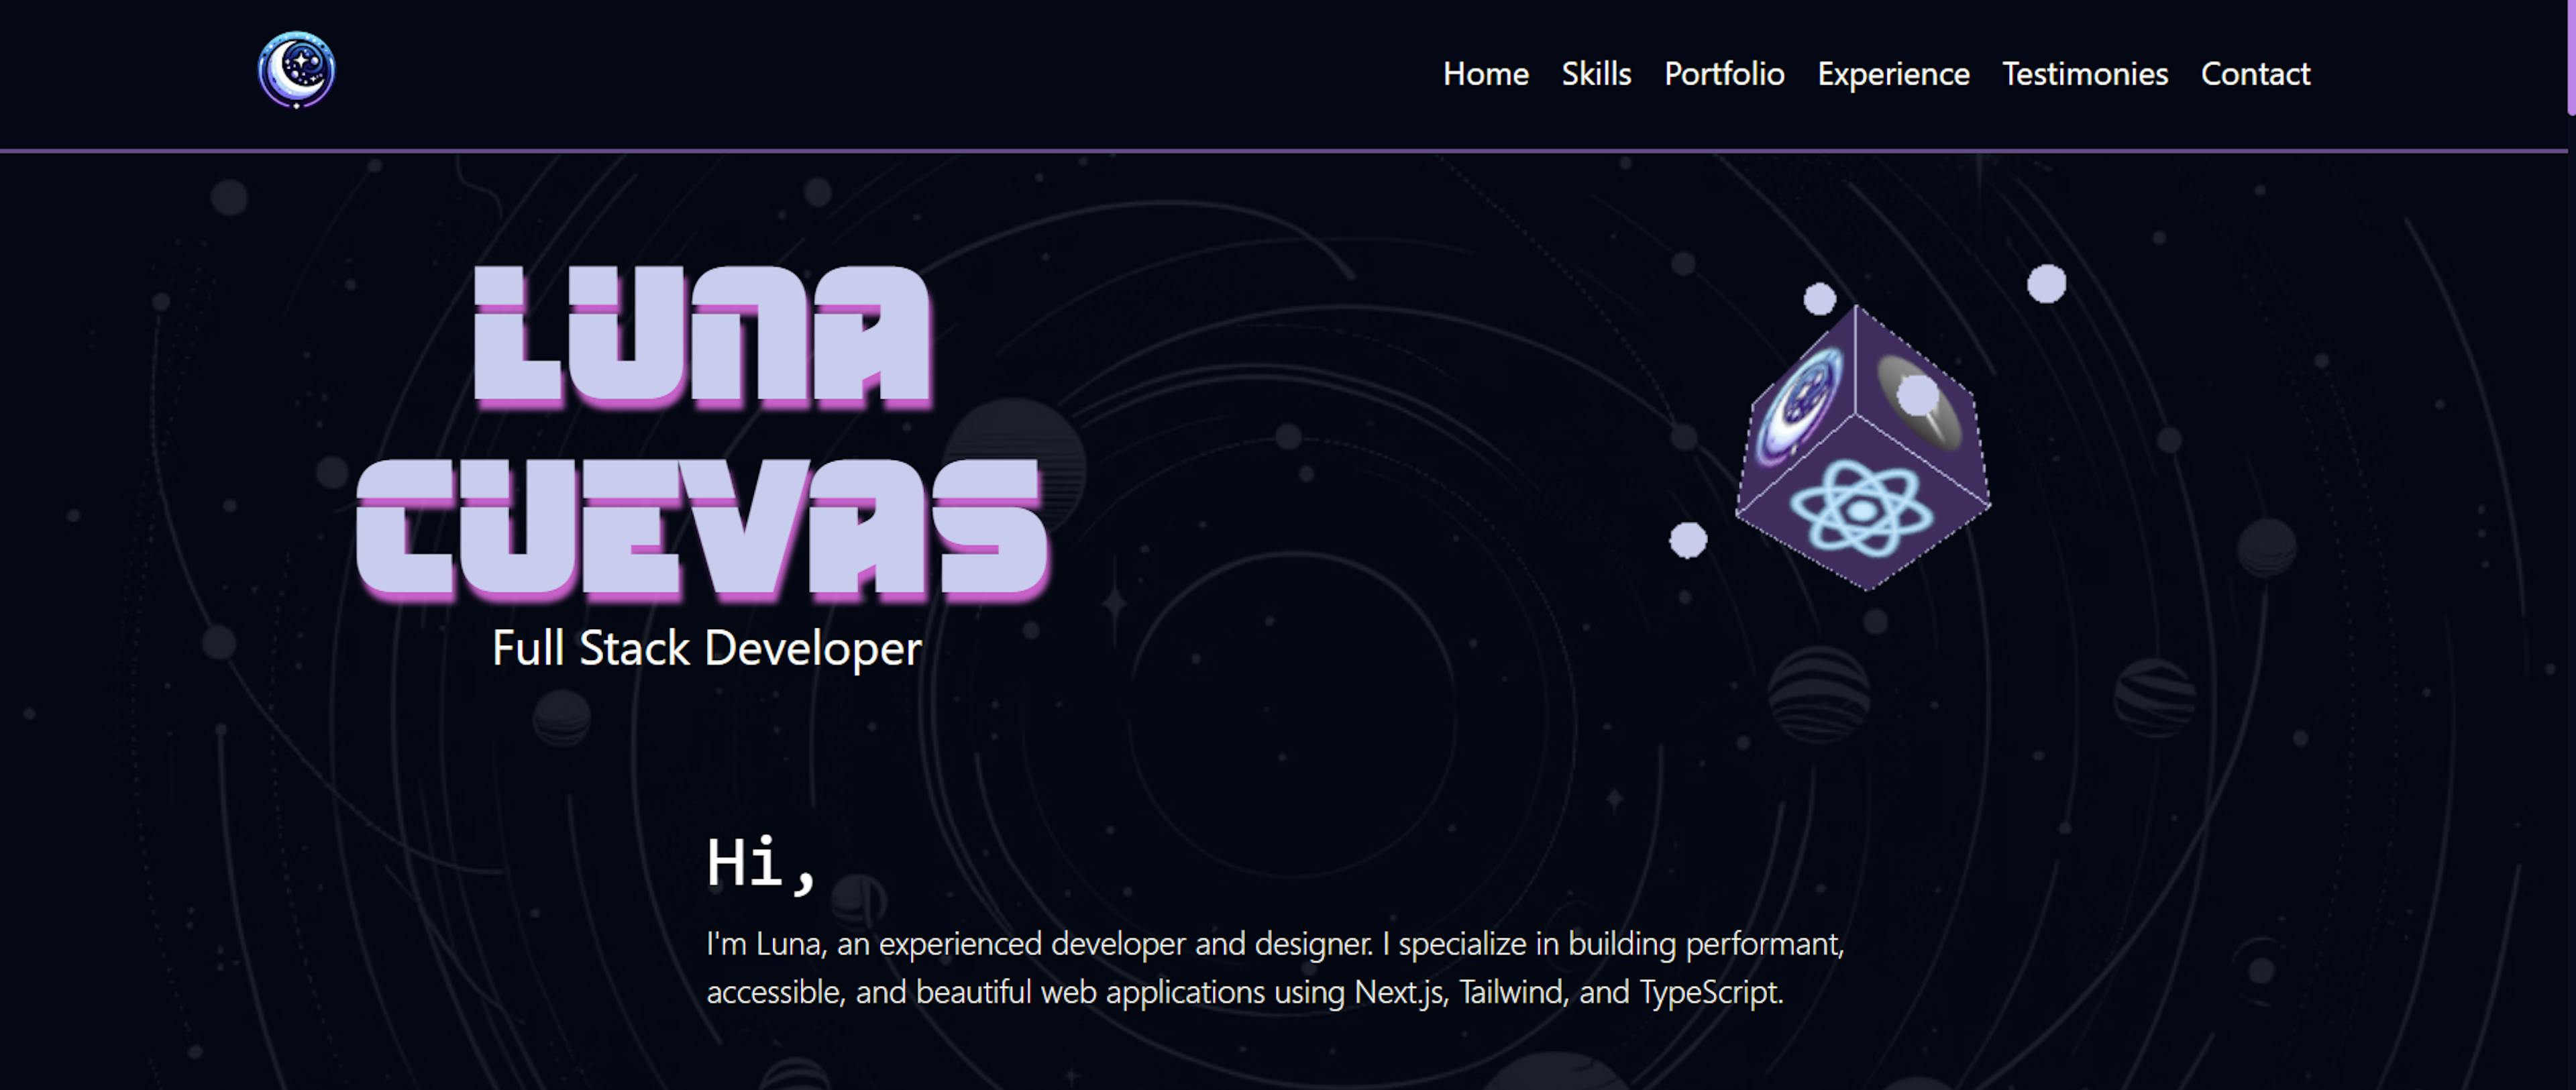 An image of Luna Cuevas website.